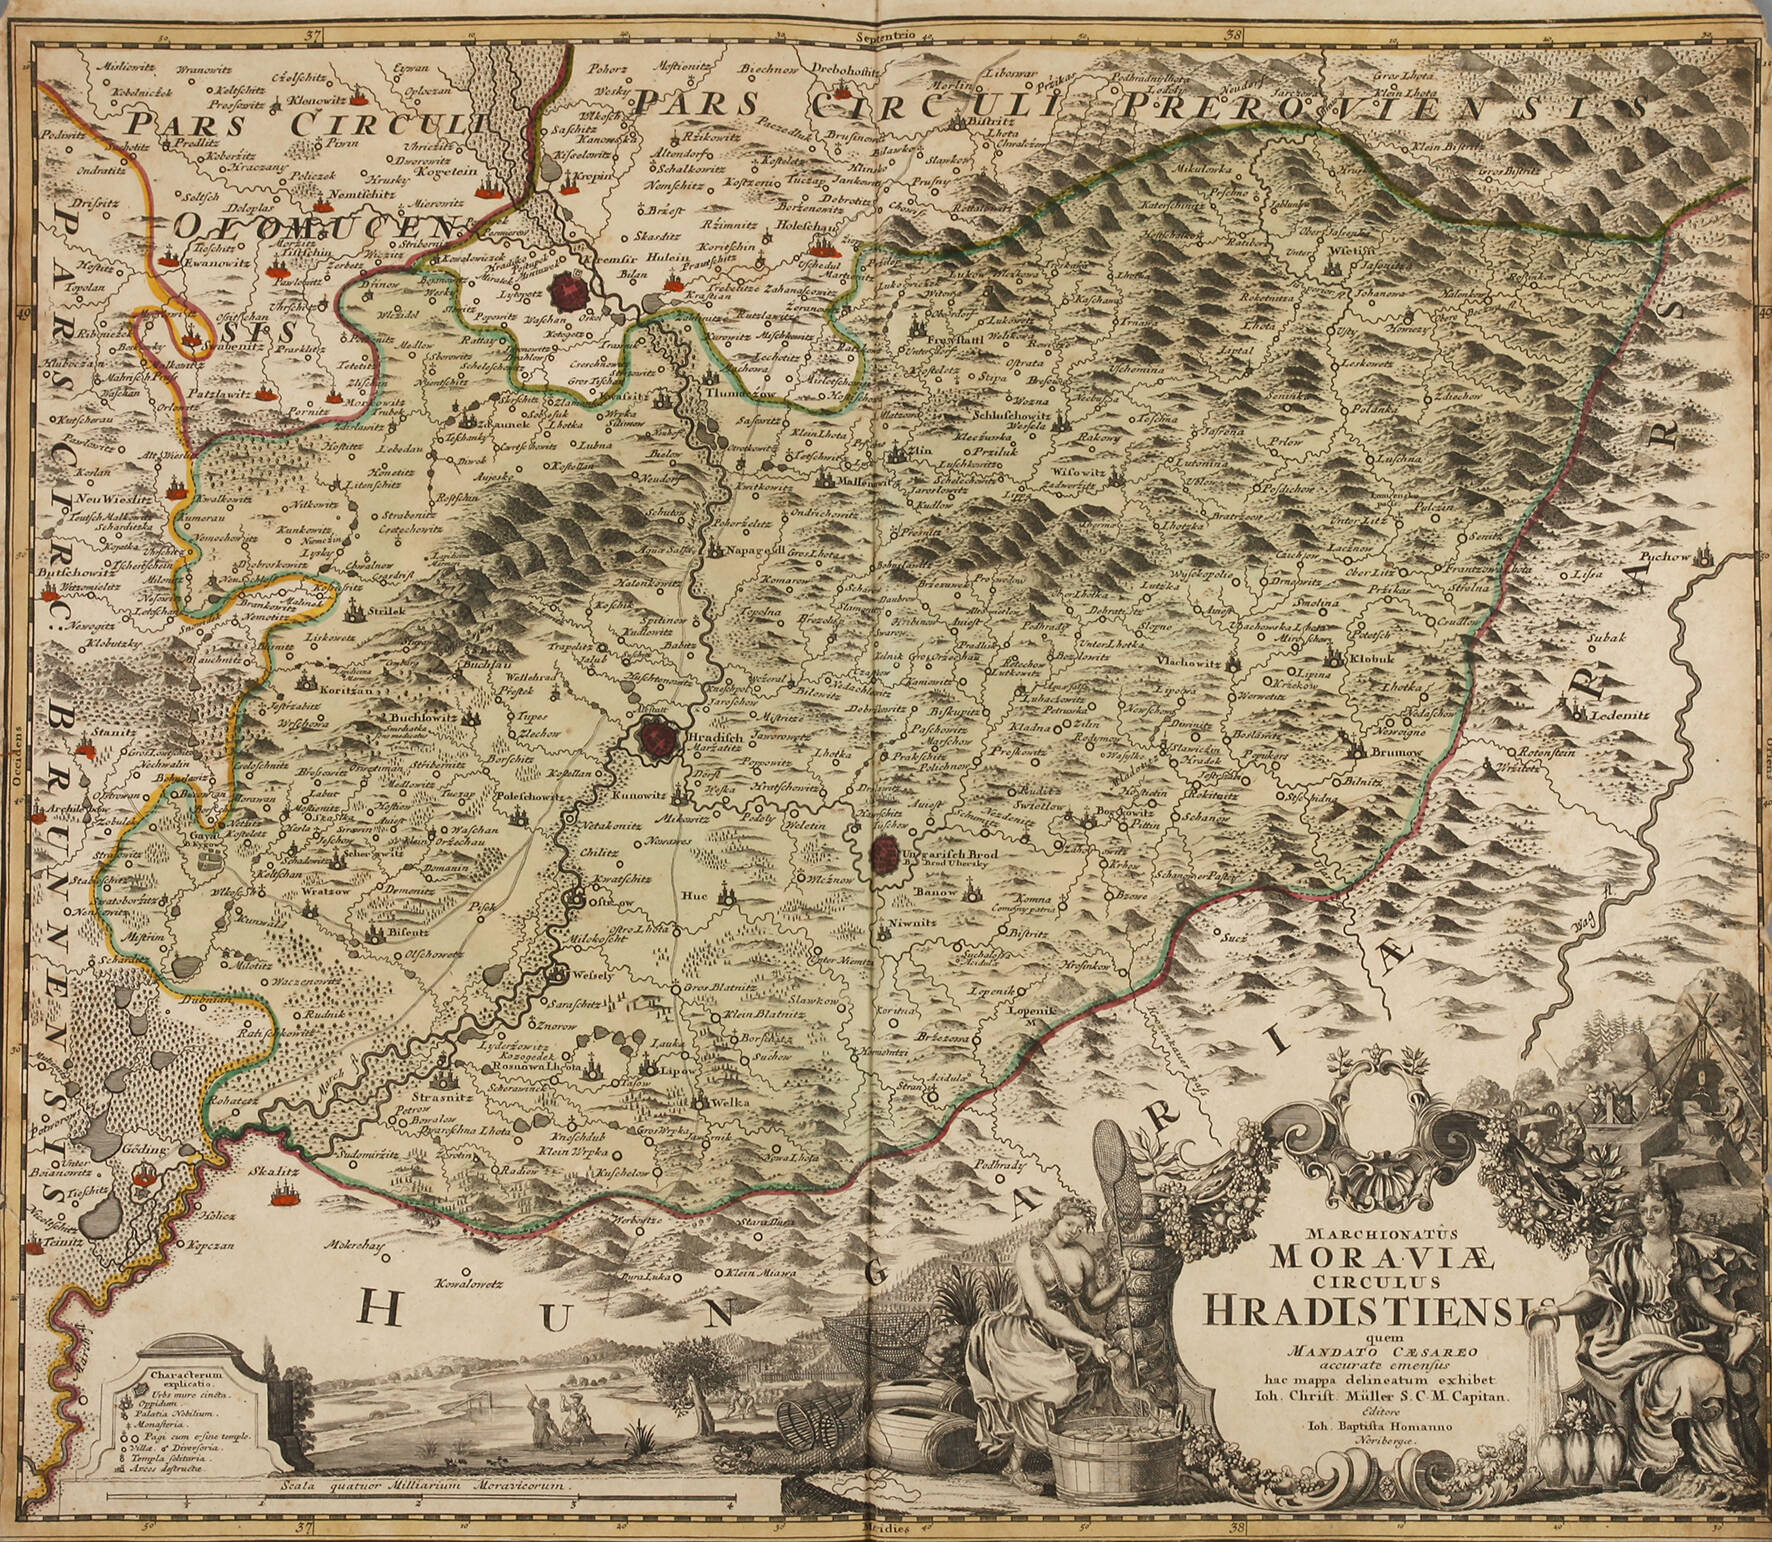 Johann Baptist Homann, Karte Teile von Mähren